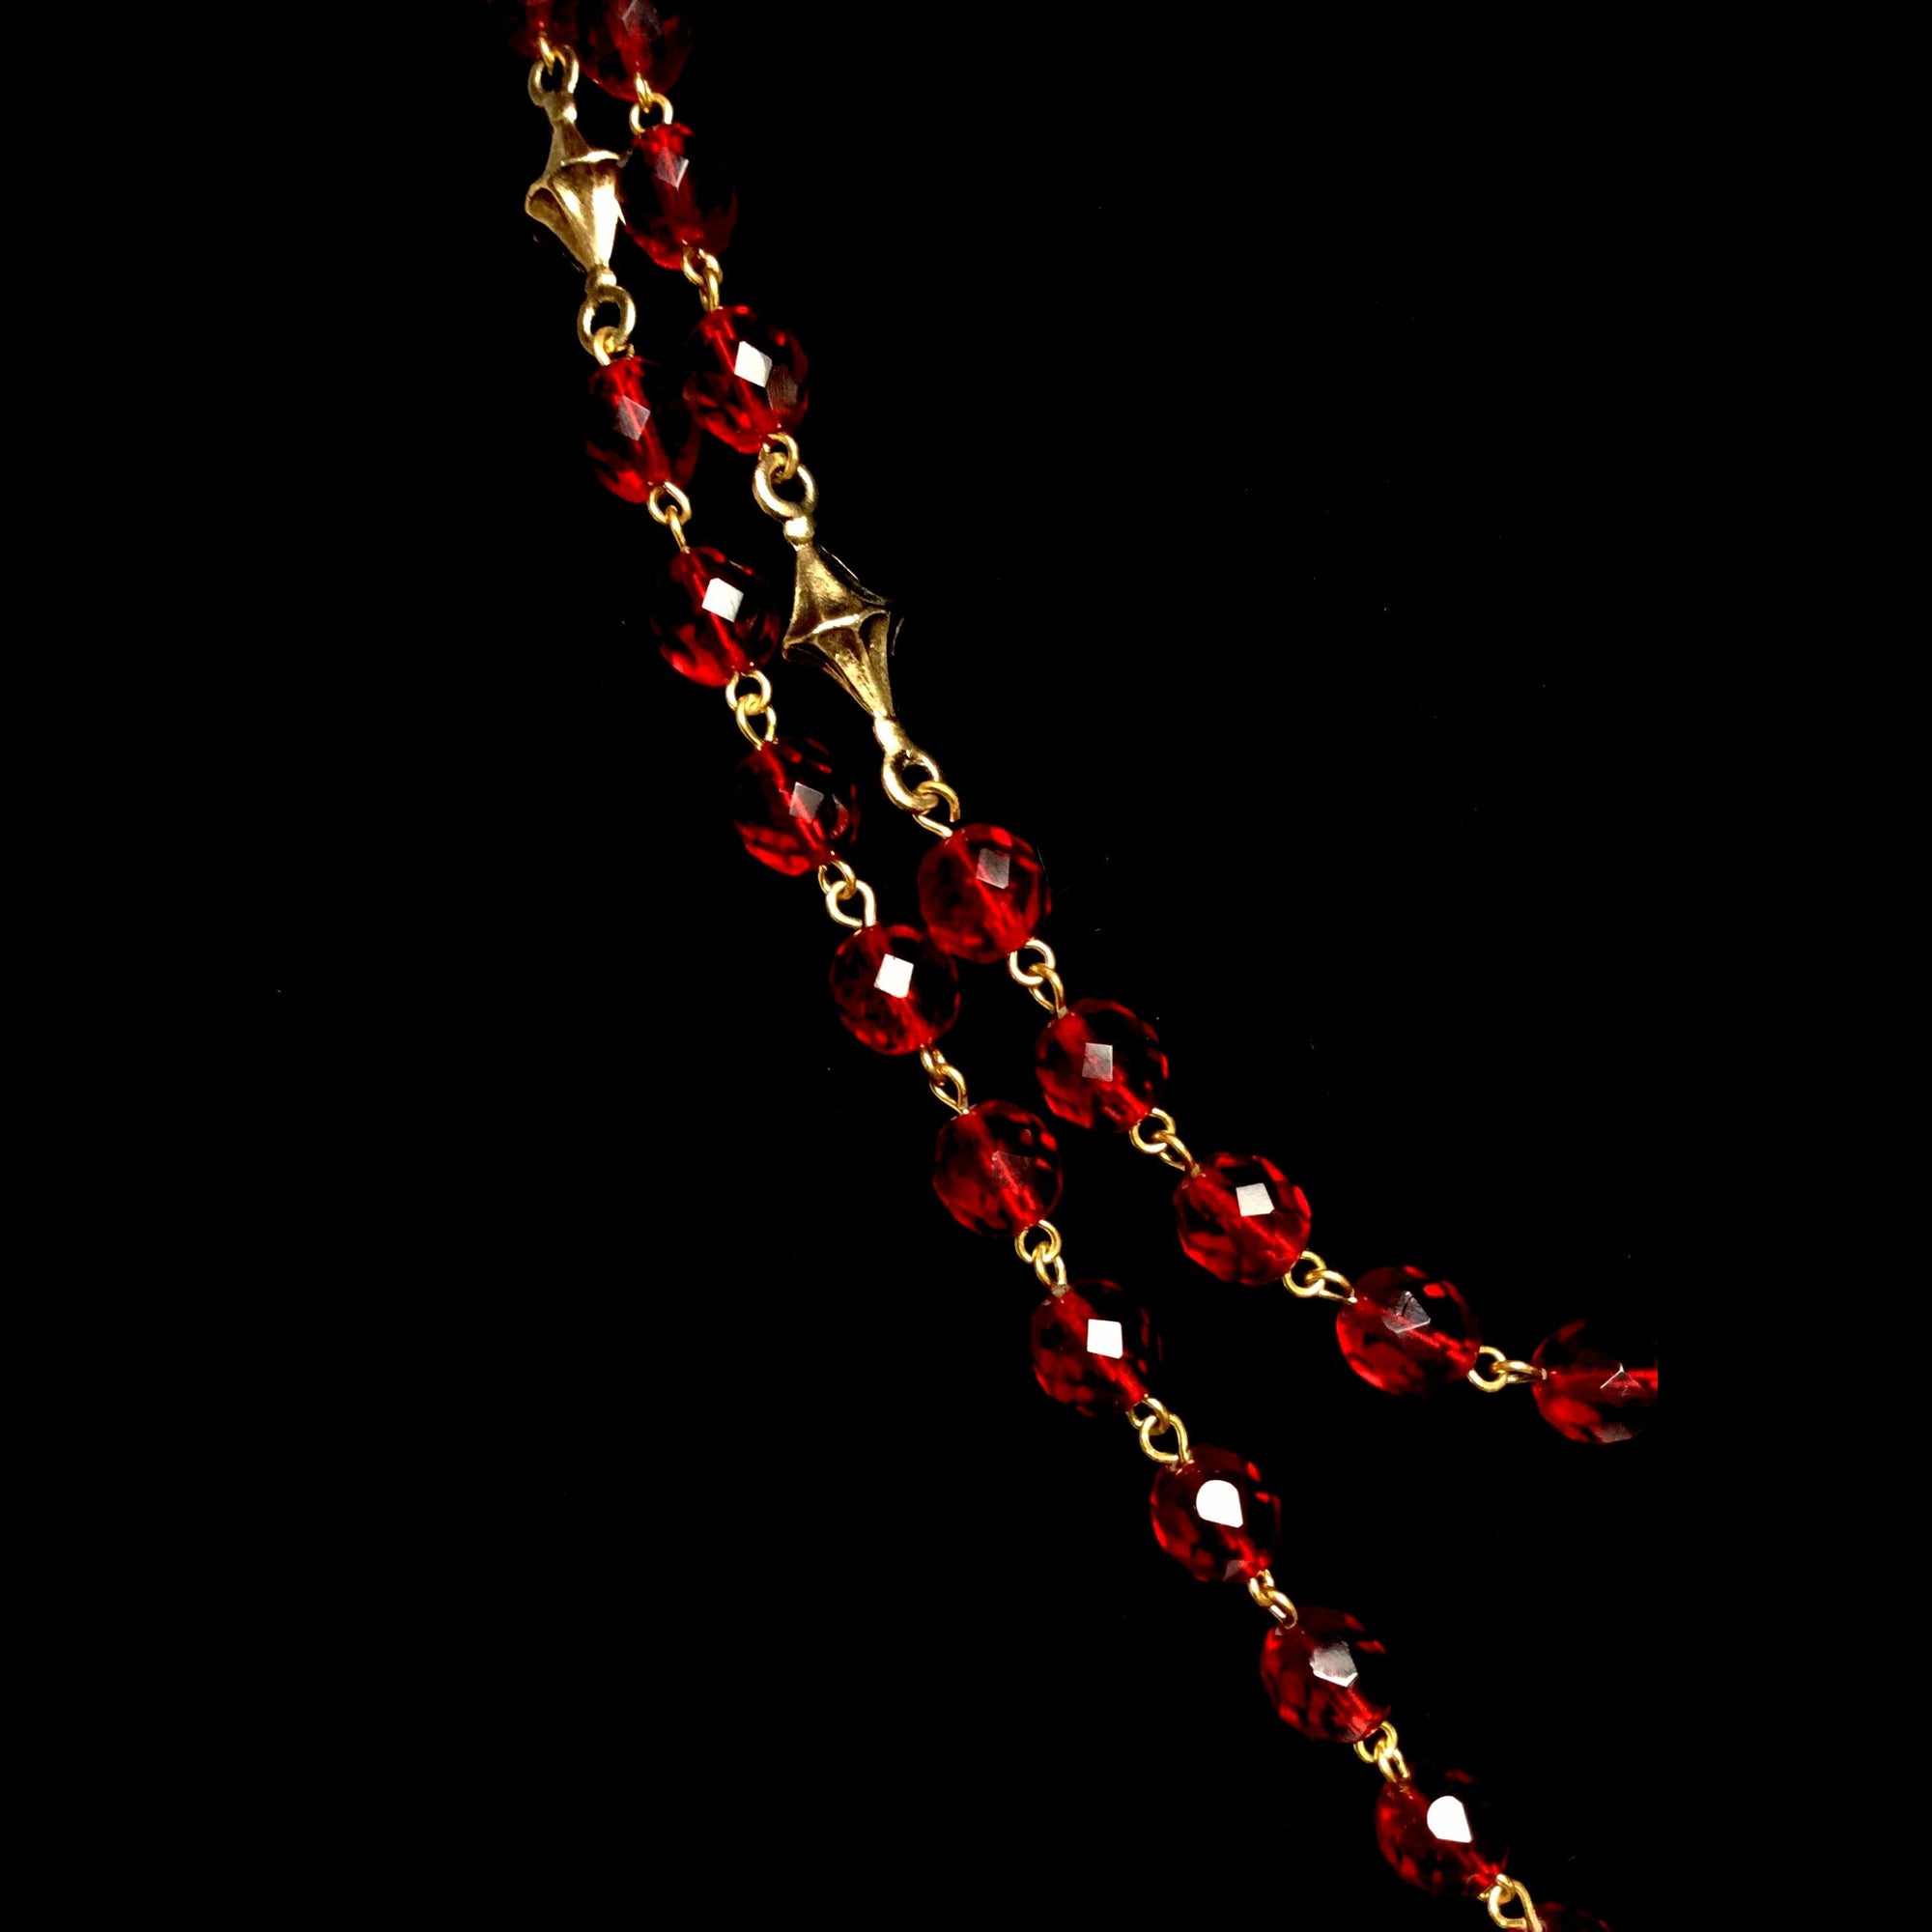 Forgotten Graces  Seven Joys Sacred Heart Rosary Necklace in Garnet & Gold